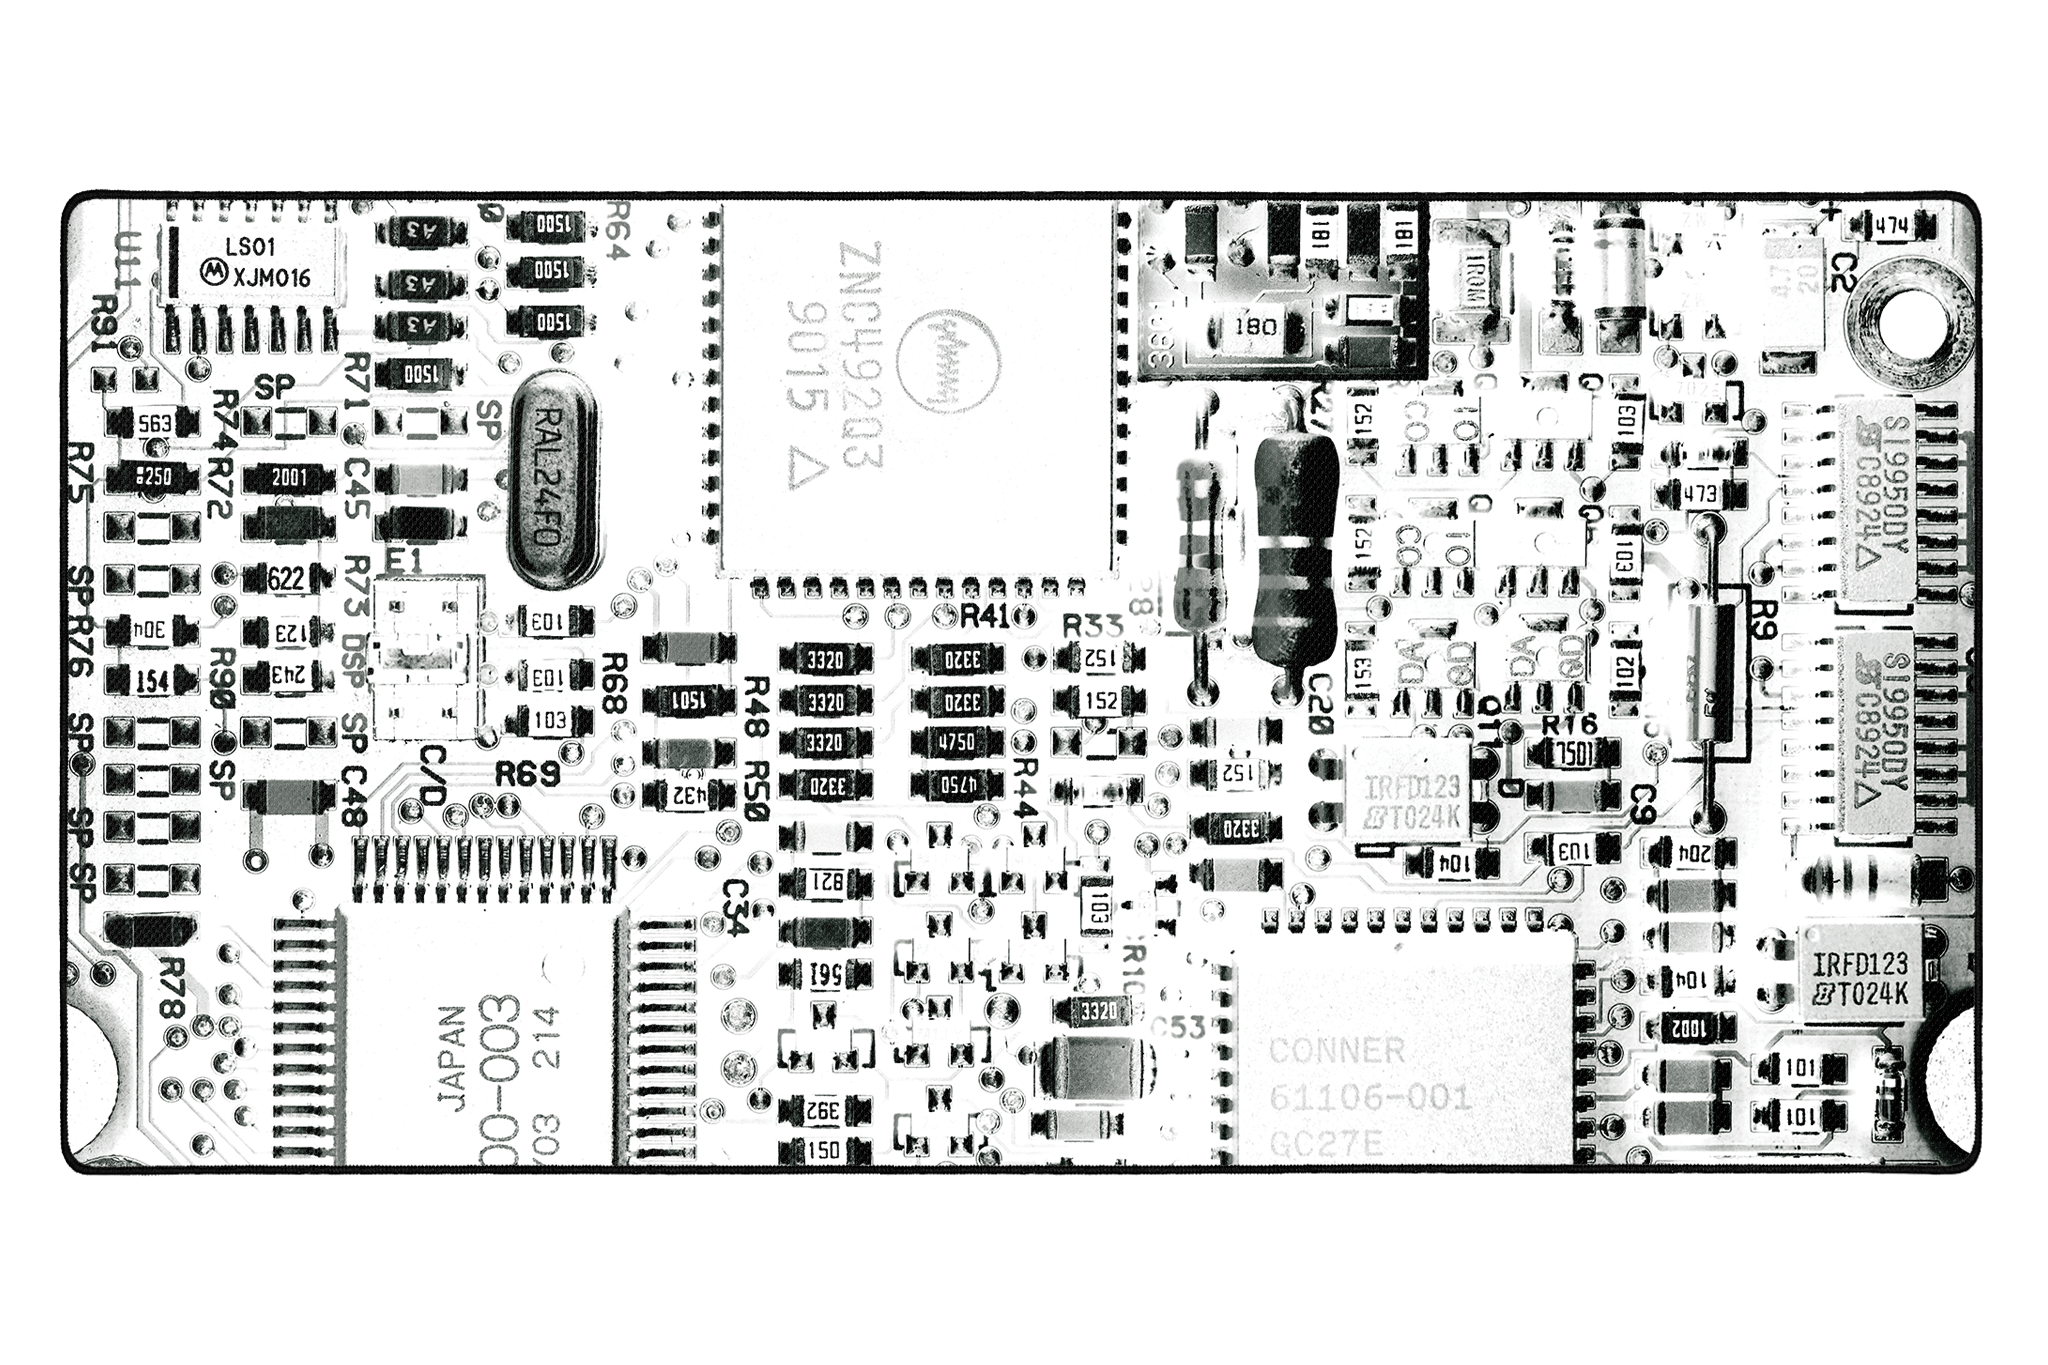 Circuit Board - The Mousepad Company